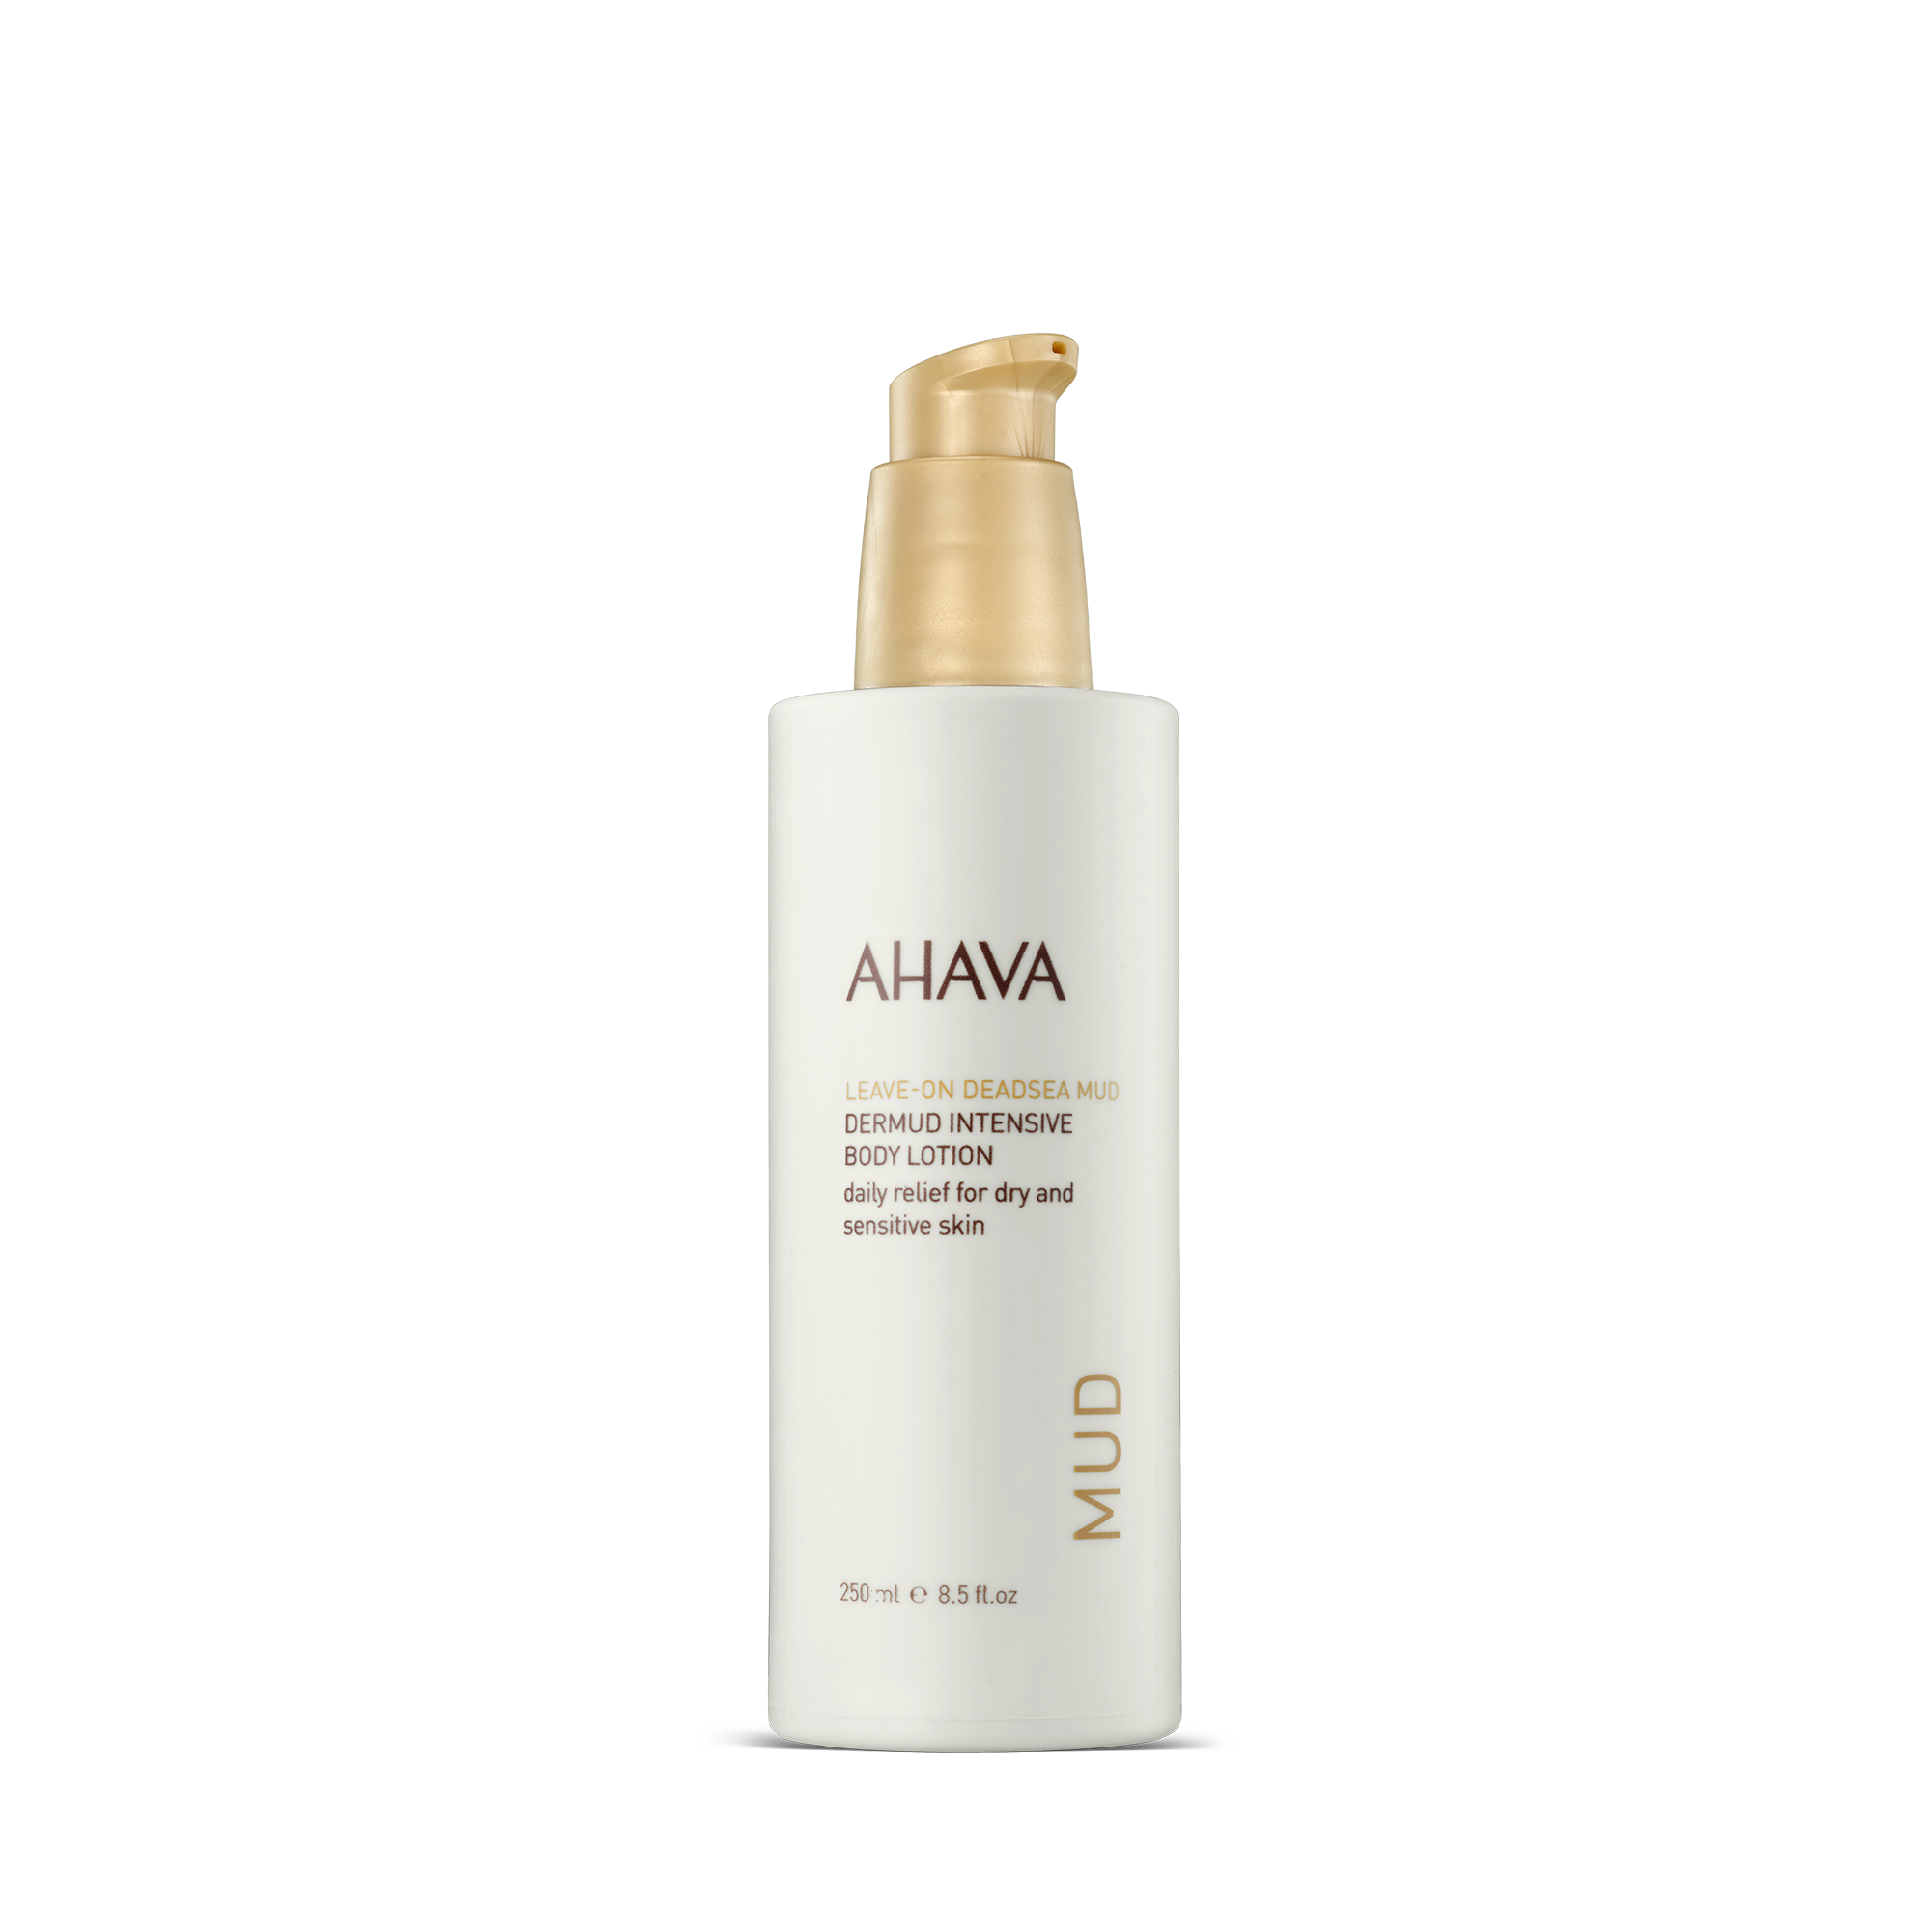 AHAVA® Dermud Intensive Dead Lotion – Mud AHAVA Sea Global Body